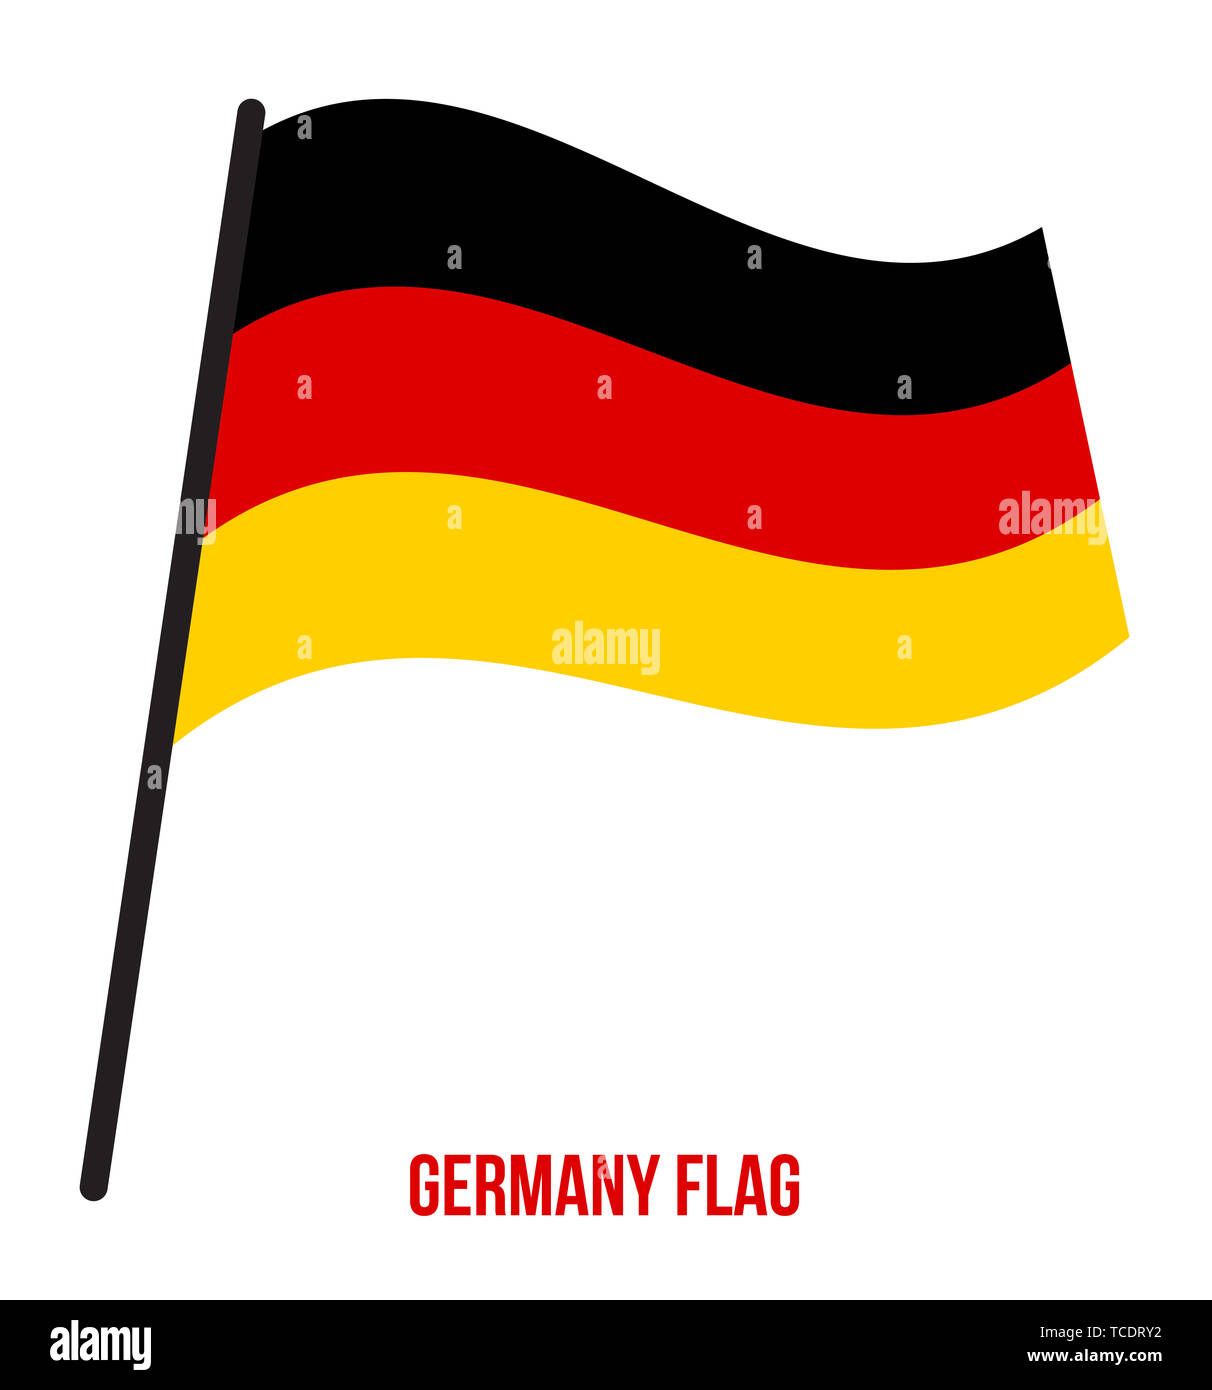 Germany Flag Waving Vector Illustration on White Background. Germany National Flag. Stock Photo